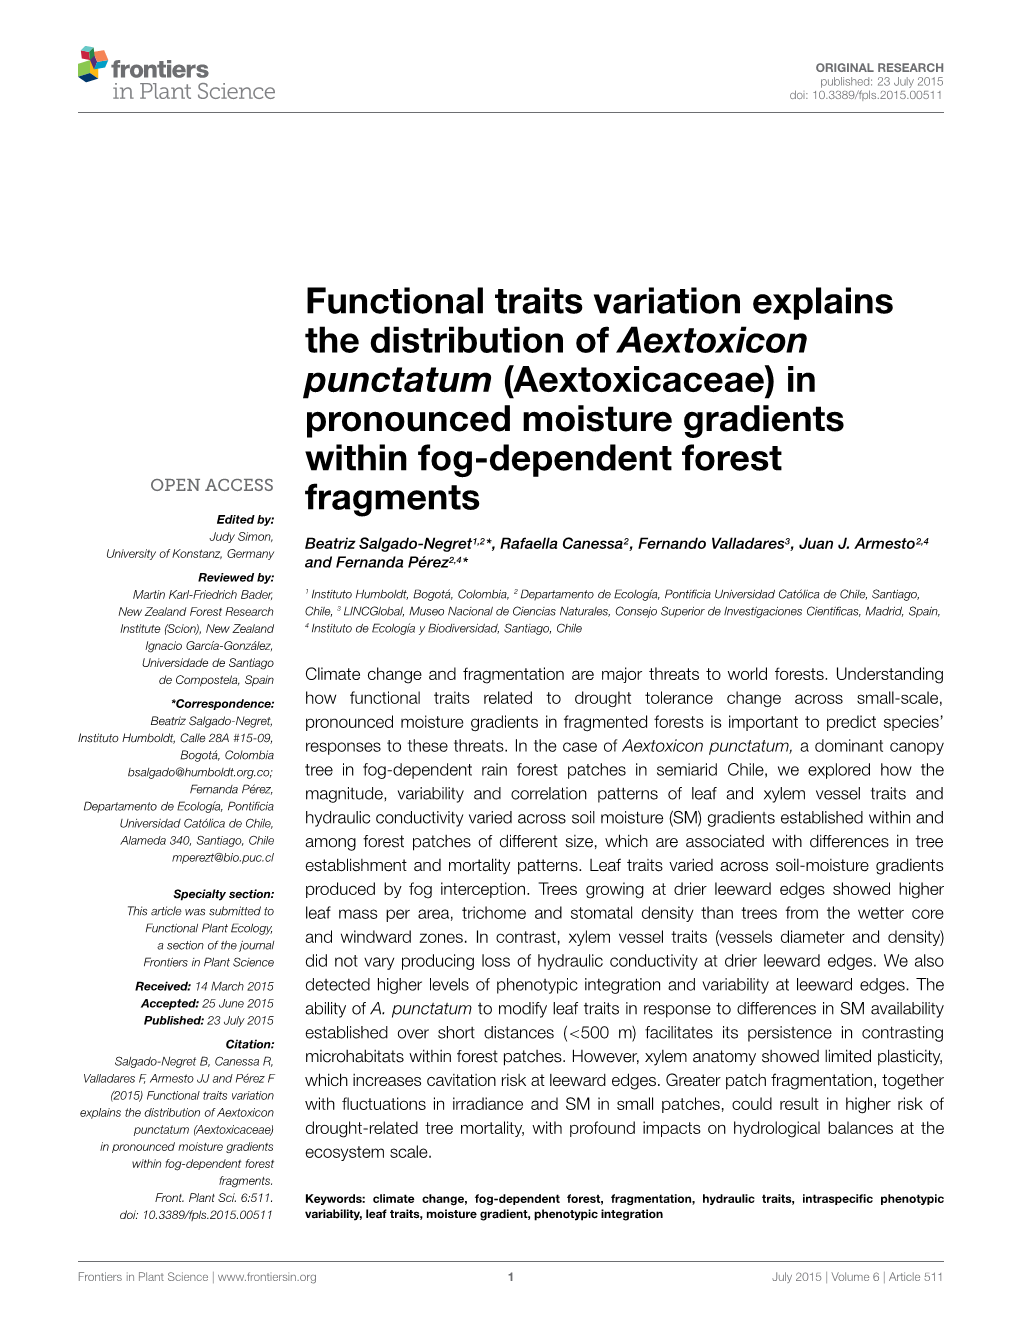 Functional Traits Variation Explains the Distribution of Aextoxicon Punctatum